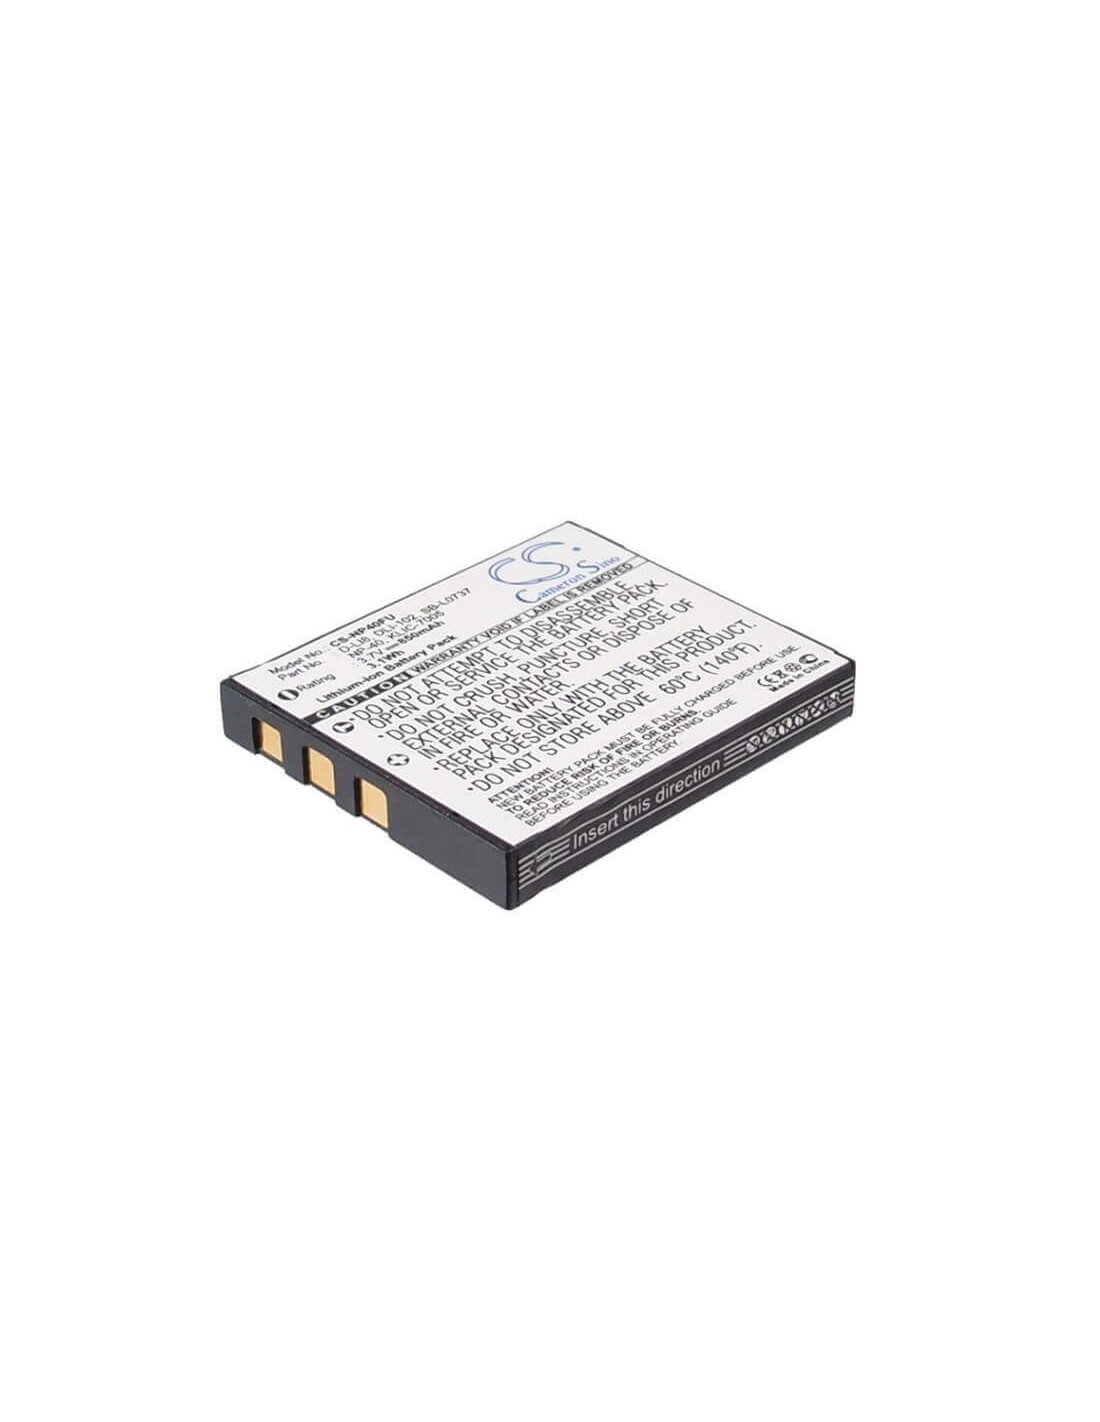 Battery for Samsung Digimax 1, Digimax I5, 3.7V, 850mAh - 3.15Wh